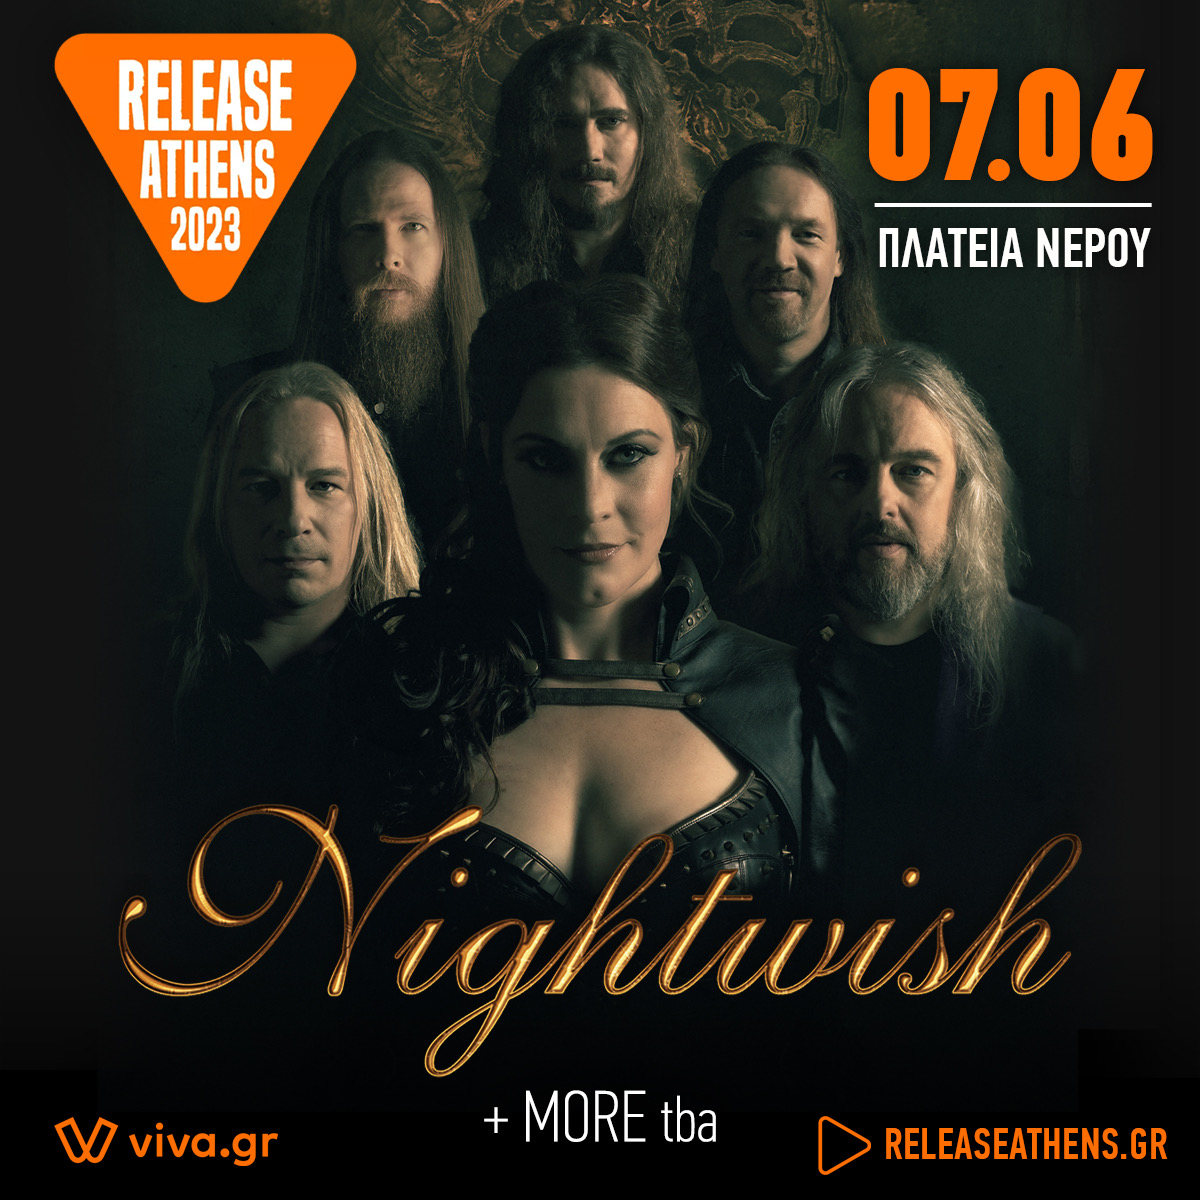 Nightwish release athens